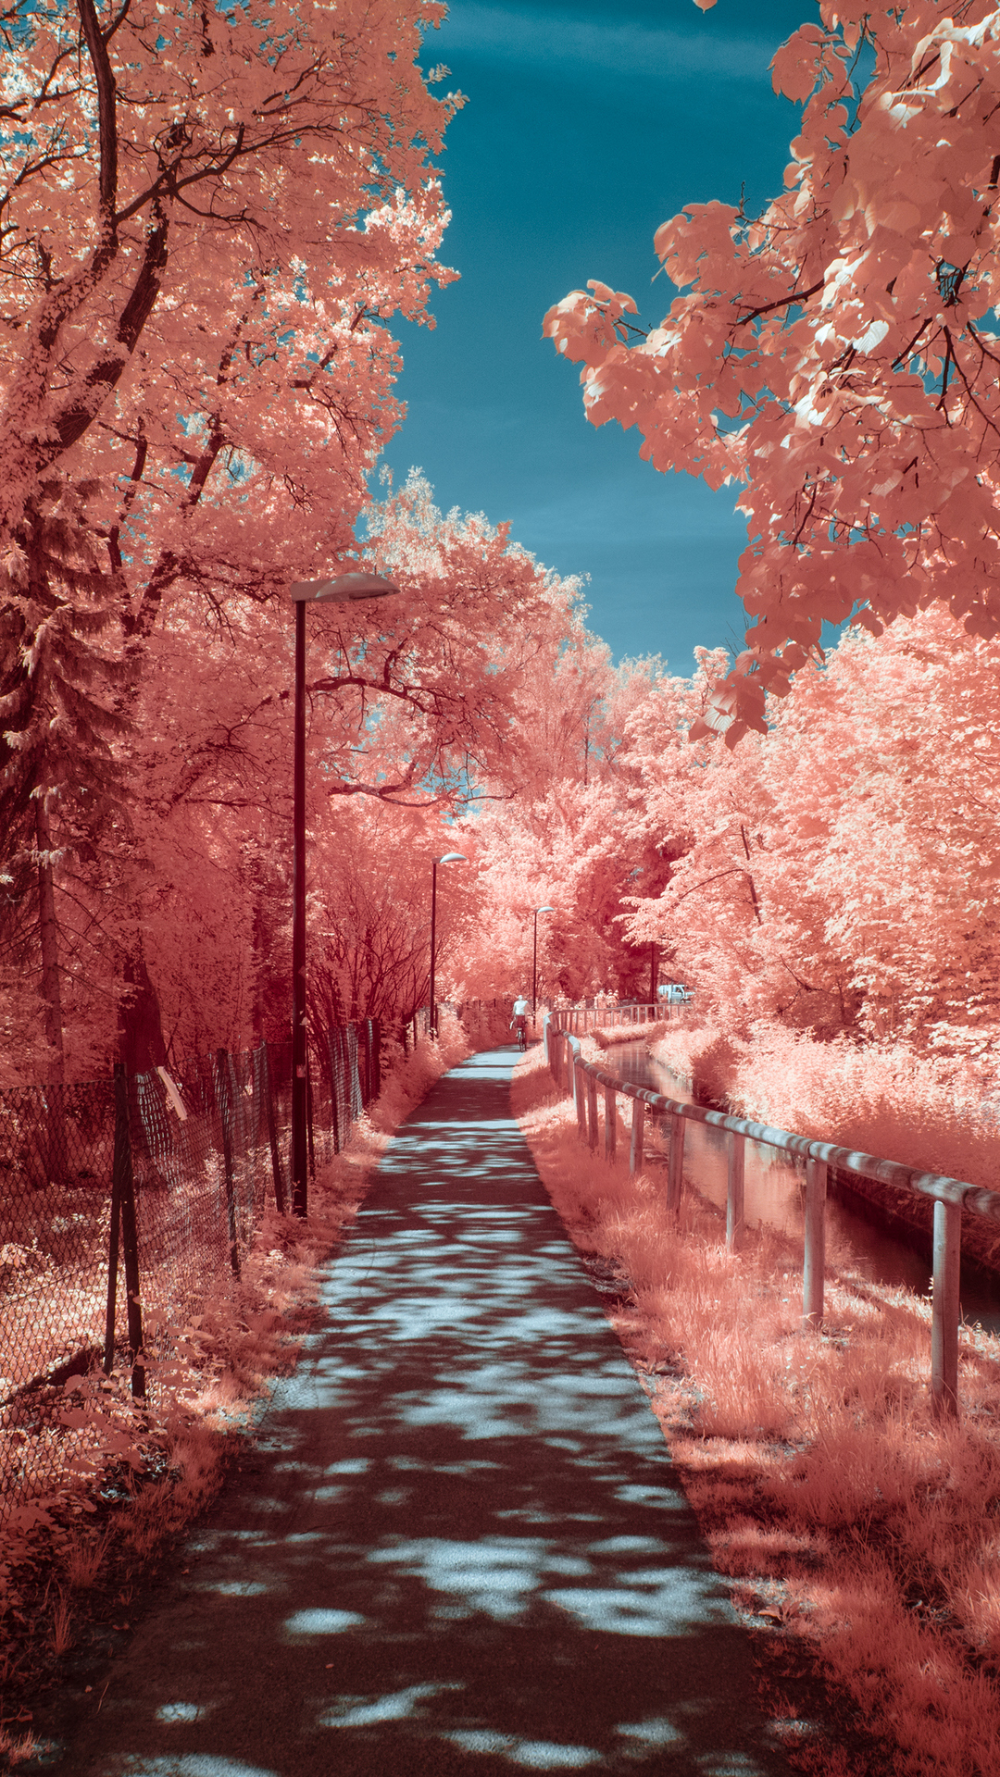 Autumn Photography 4k In 1080x1920 Resolution. Paisaje de fantasía, Ilustración de paisaje, Paisaje asiático